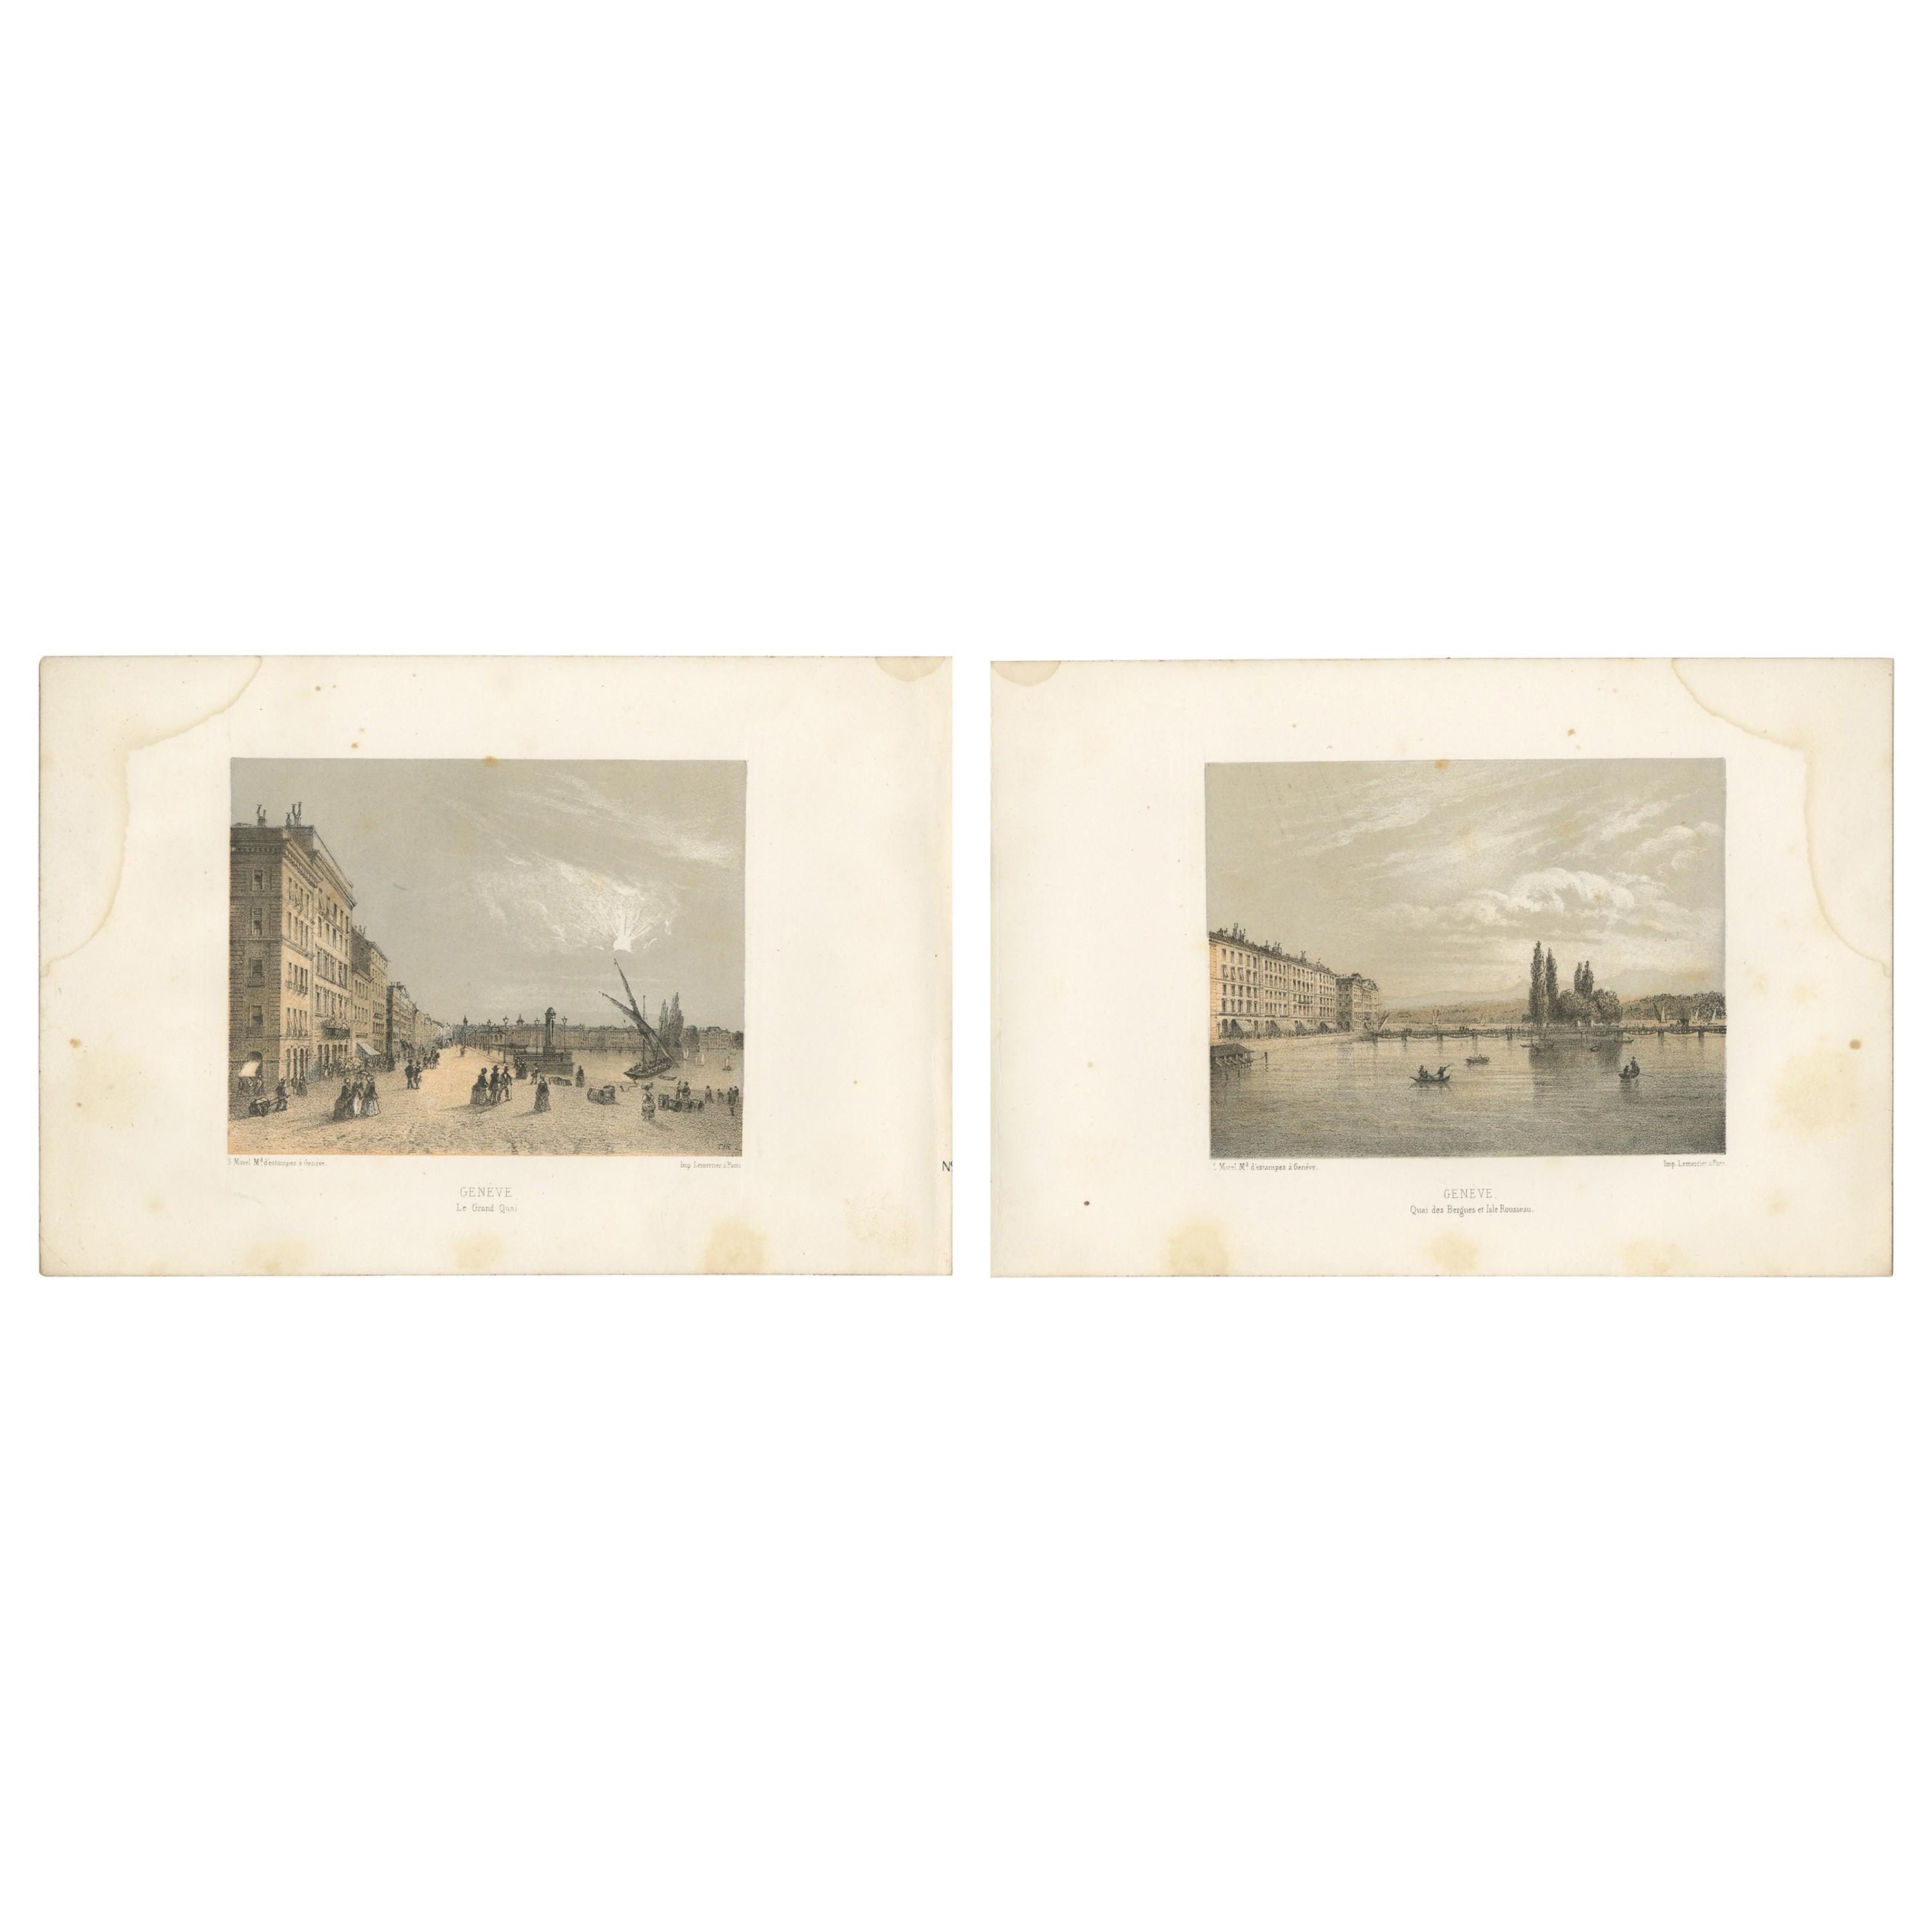 Set of 2 Antique Prints of Switzerland - Geneva - by Morel (c.1850)